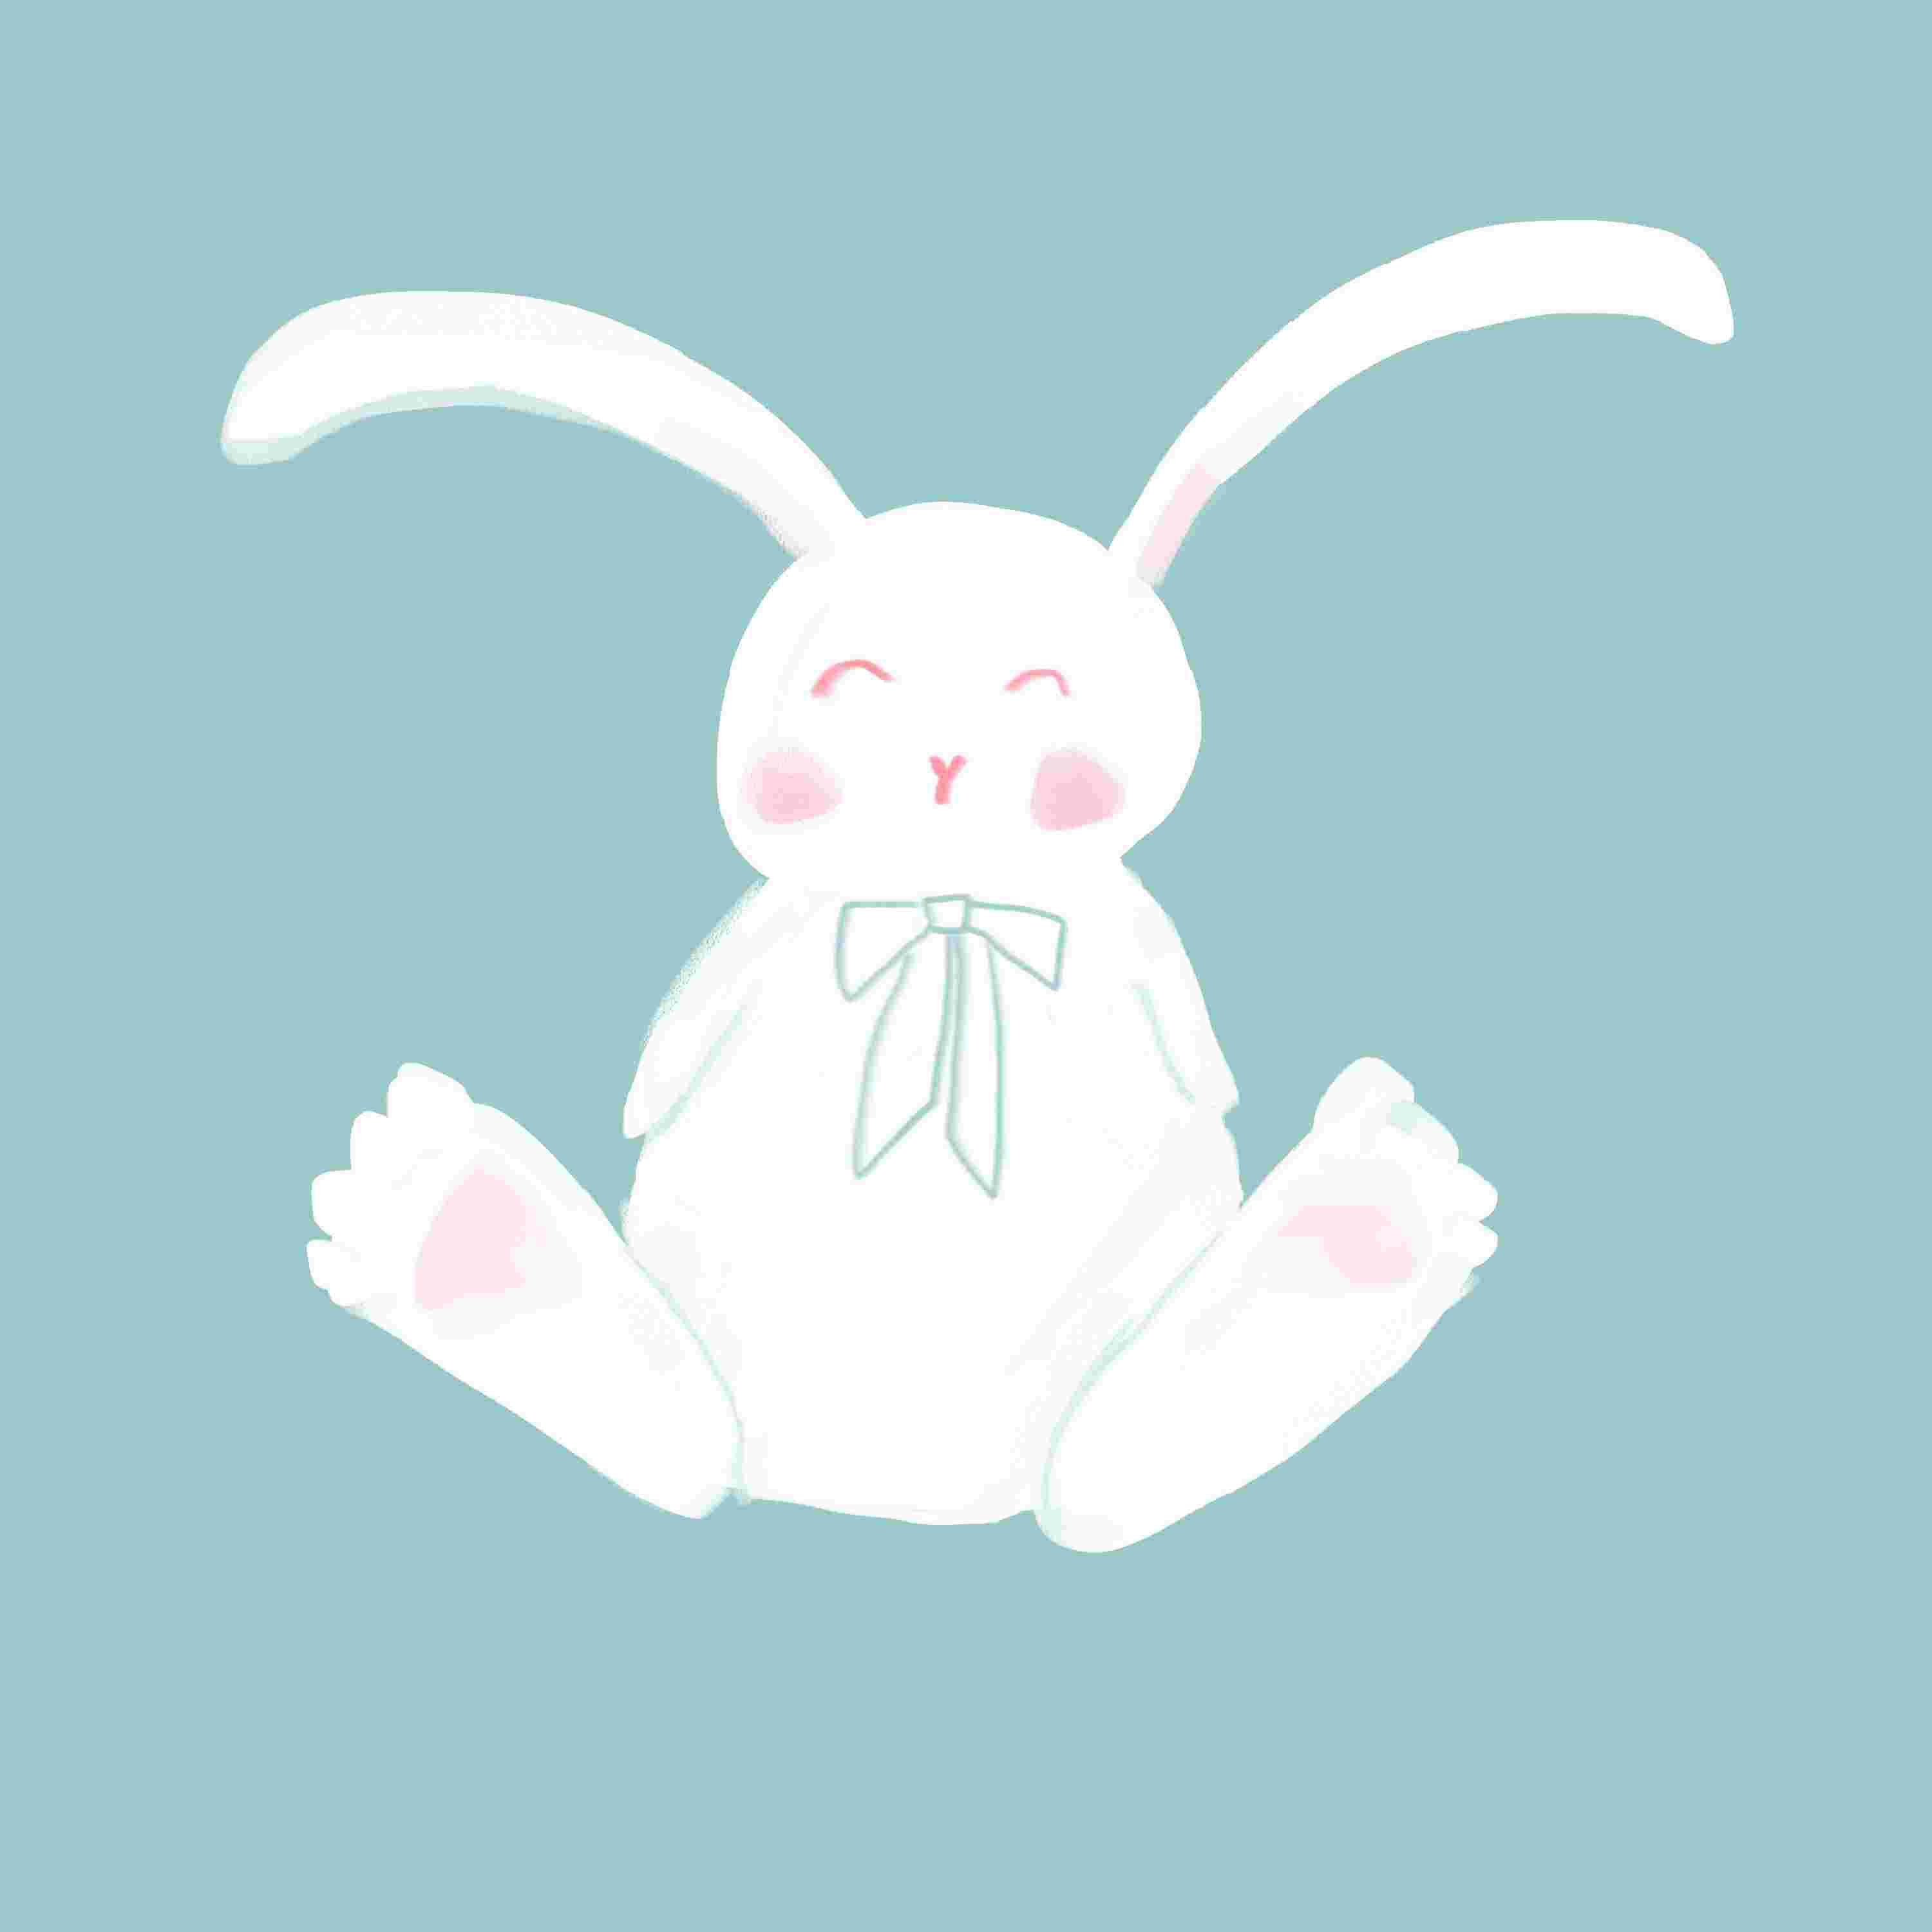 simple cartoon bunny